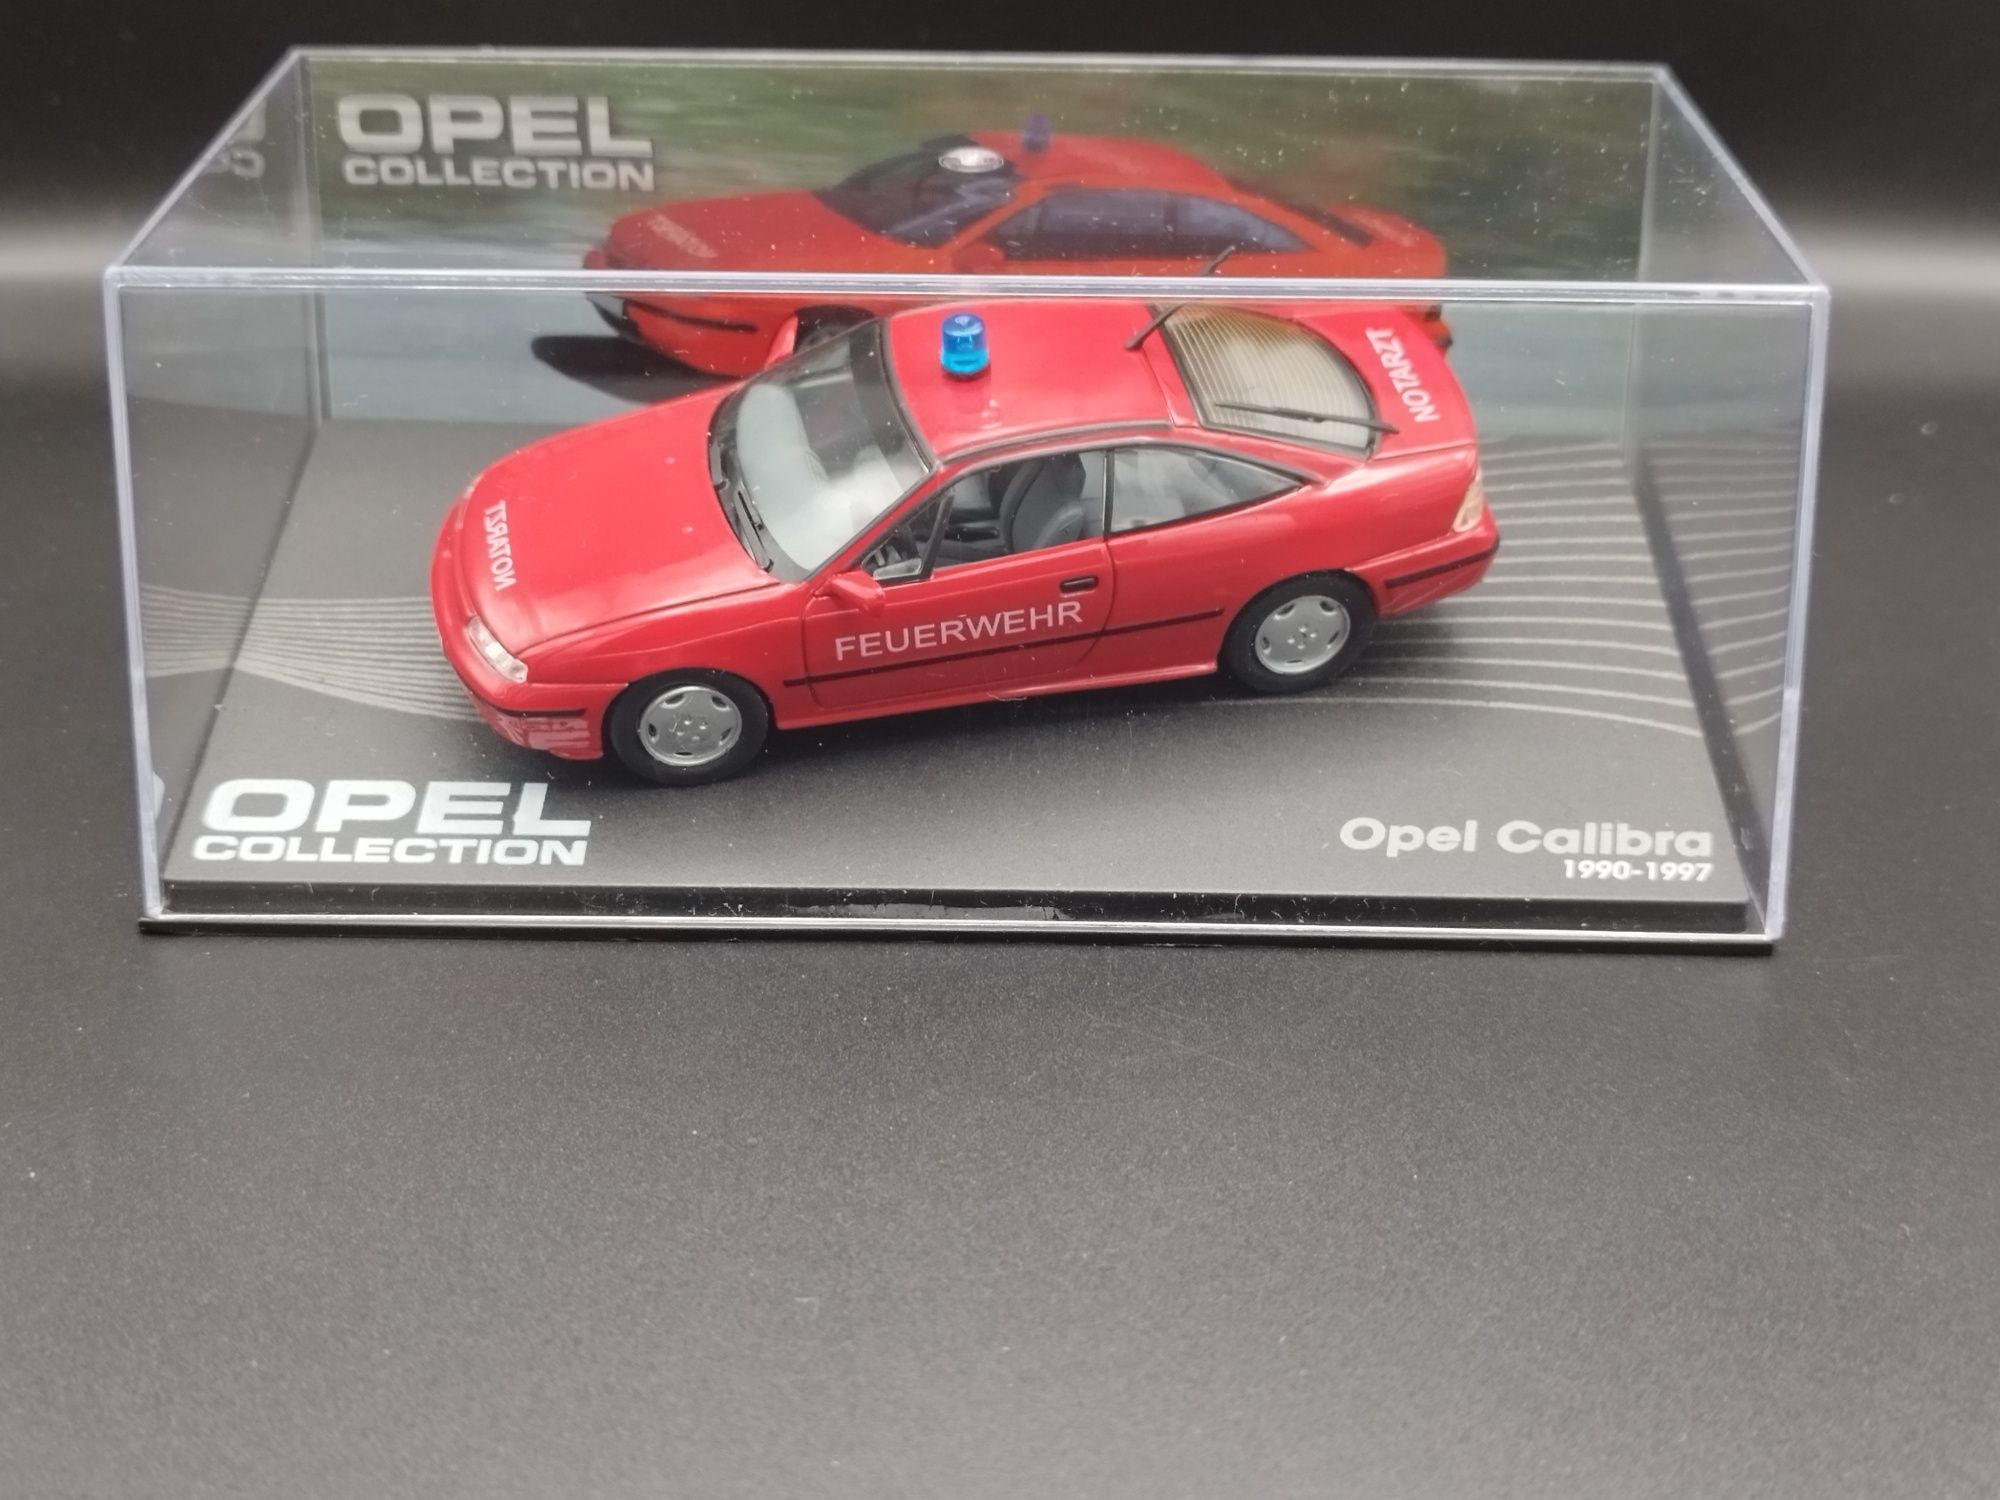 1:43 Opel Collection Calibra  model używany